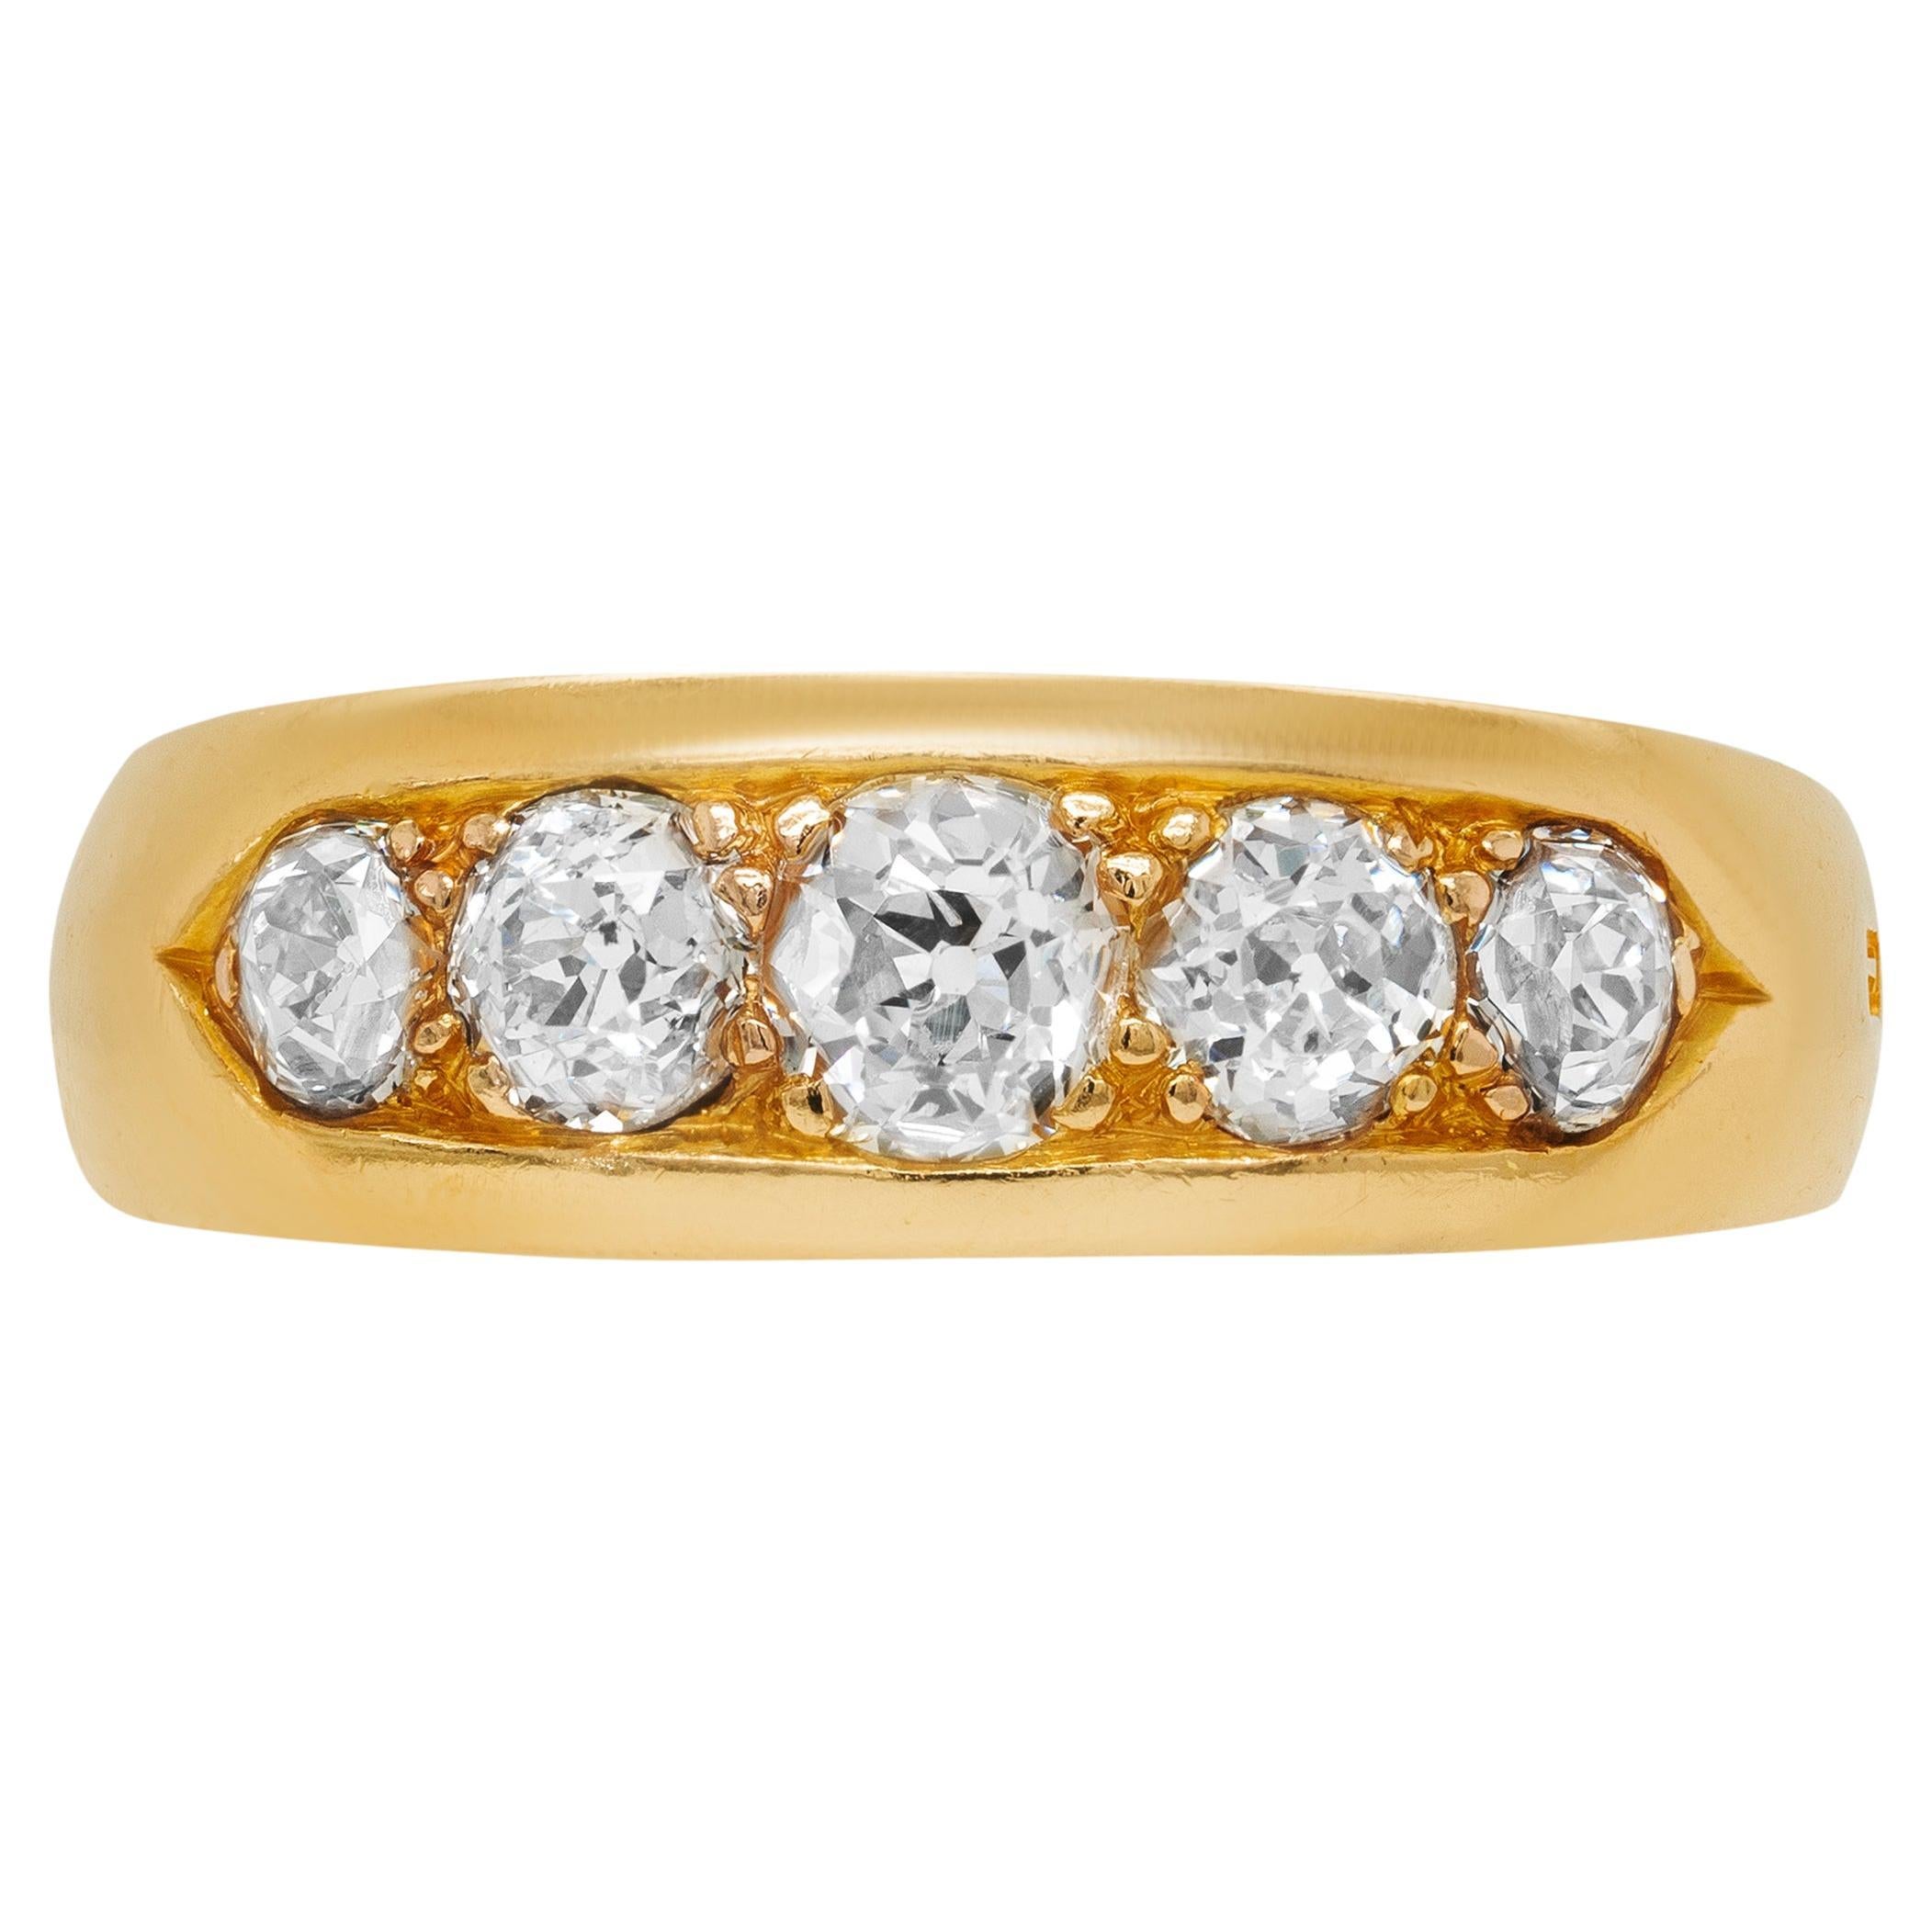 Antique Old Cut Diamond 18 Carat Yellow Gold Five-Stone Ring, 1886